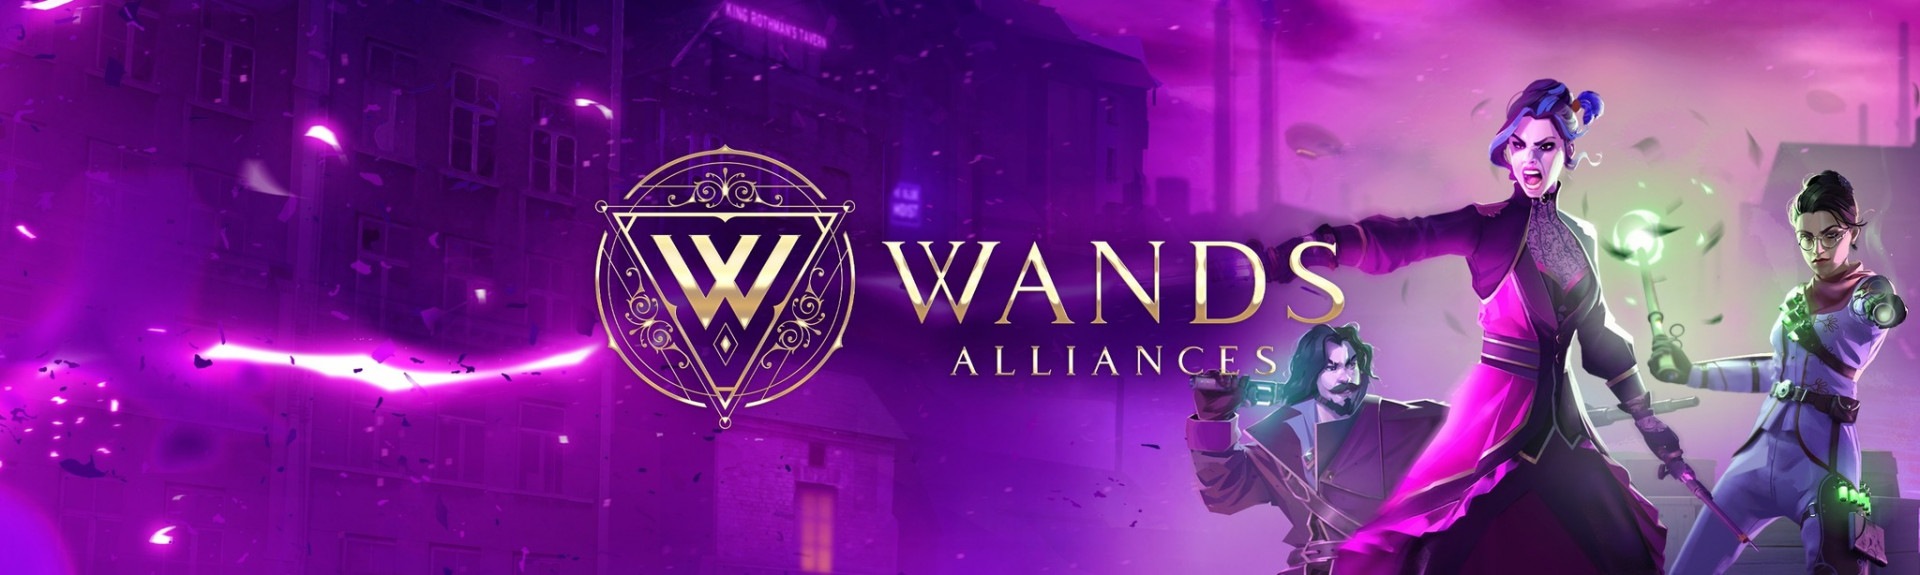 Wands Alliances: ANÁLISIS